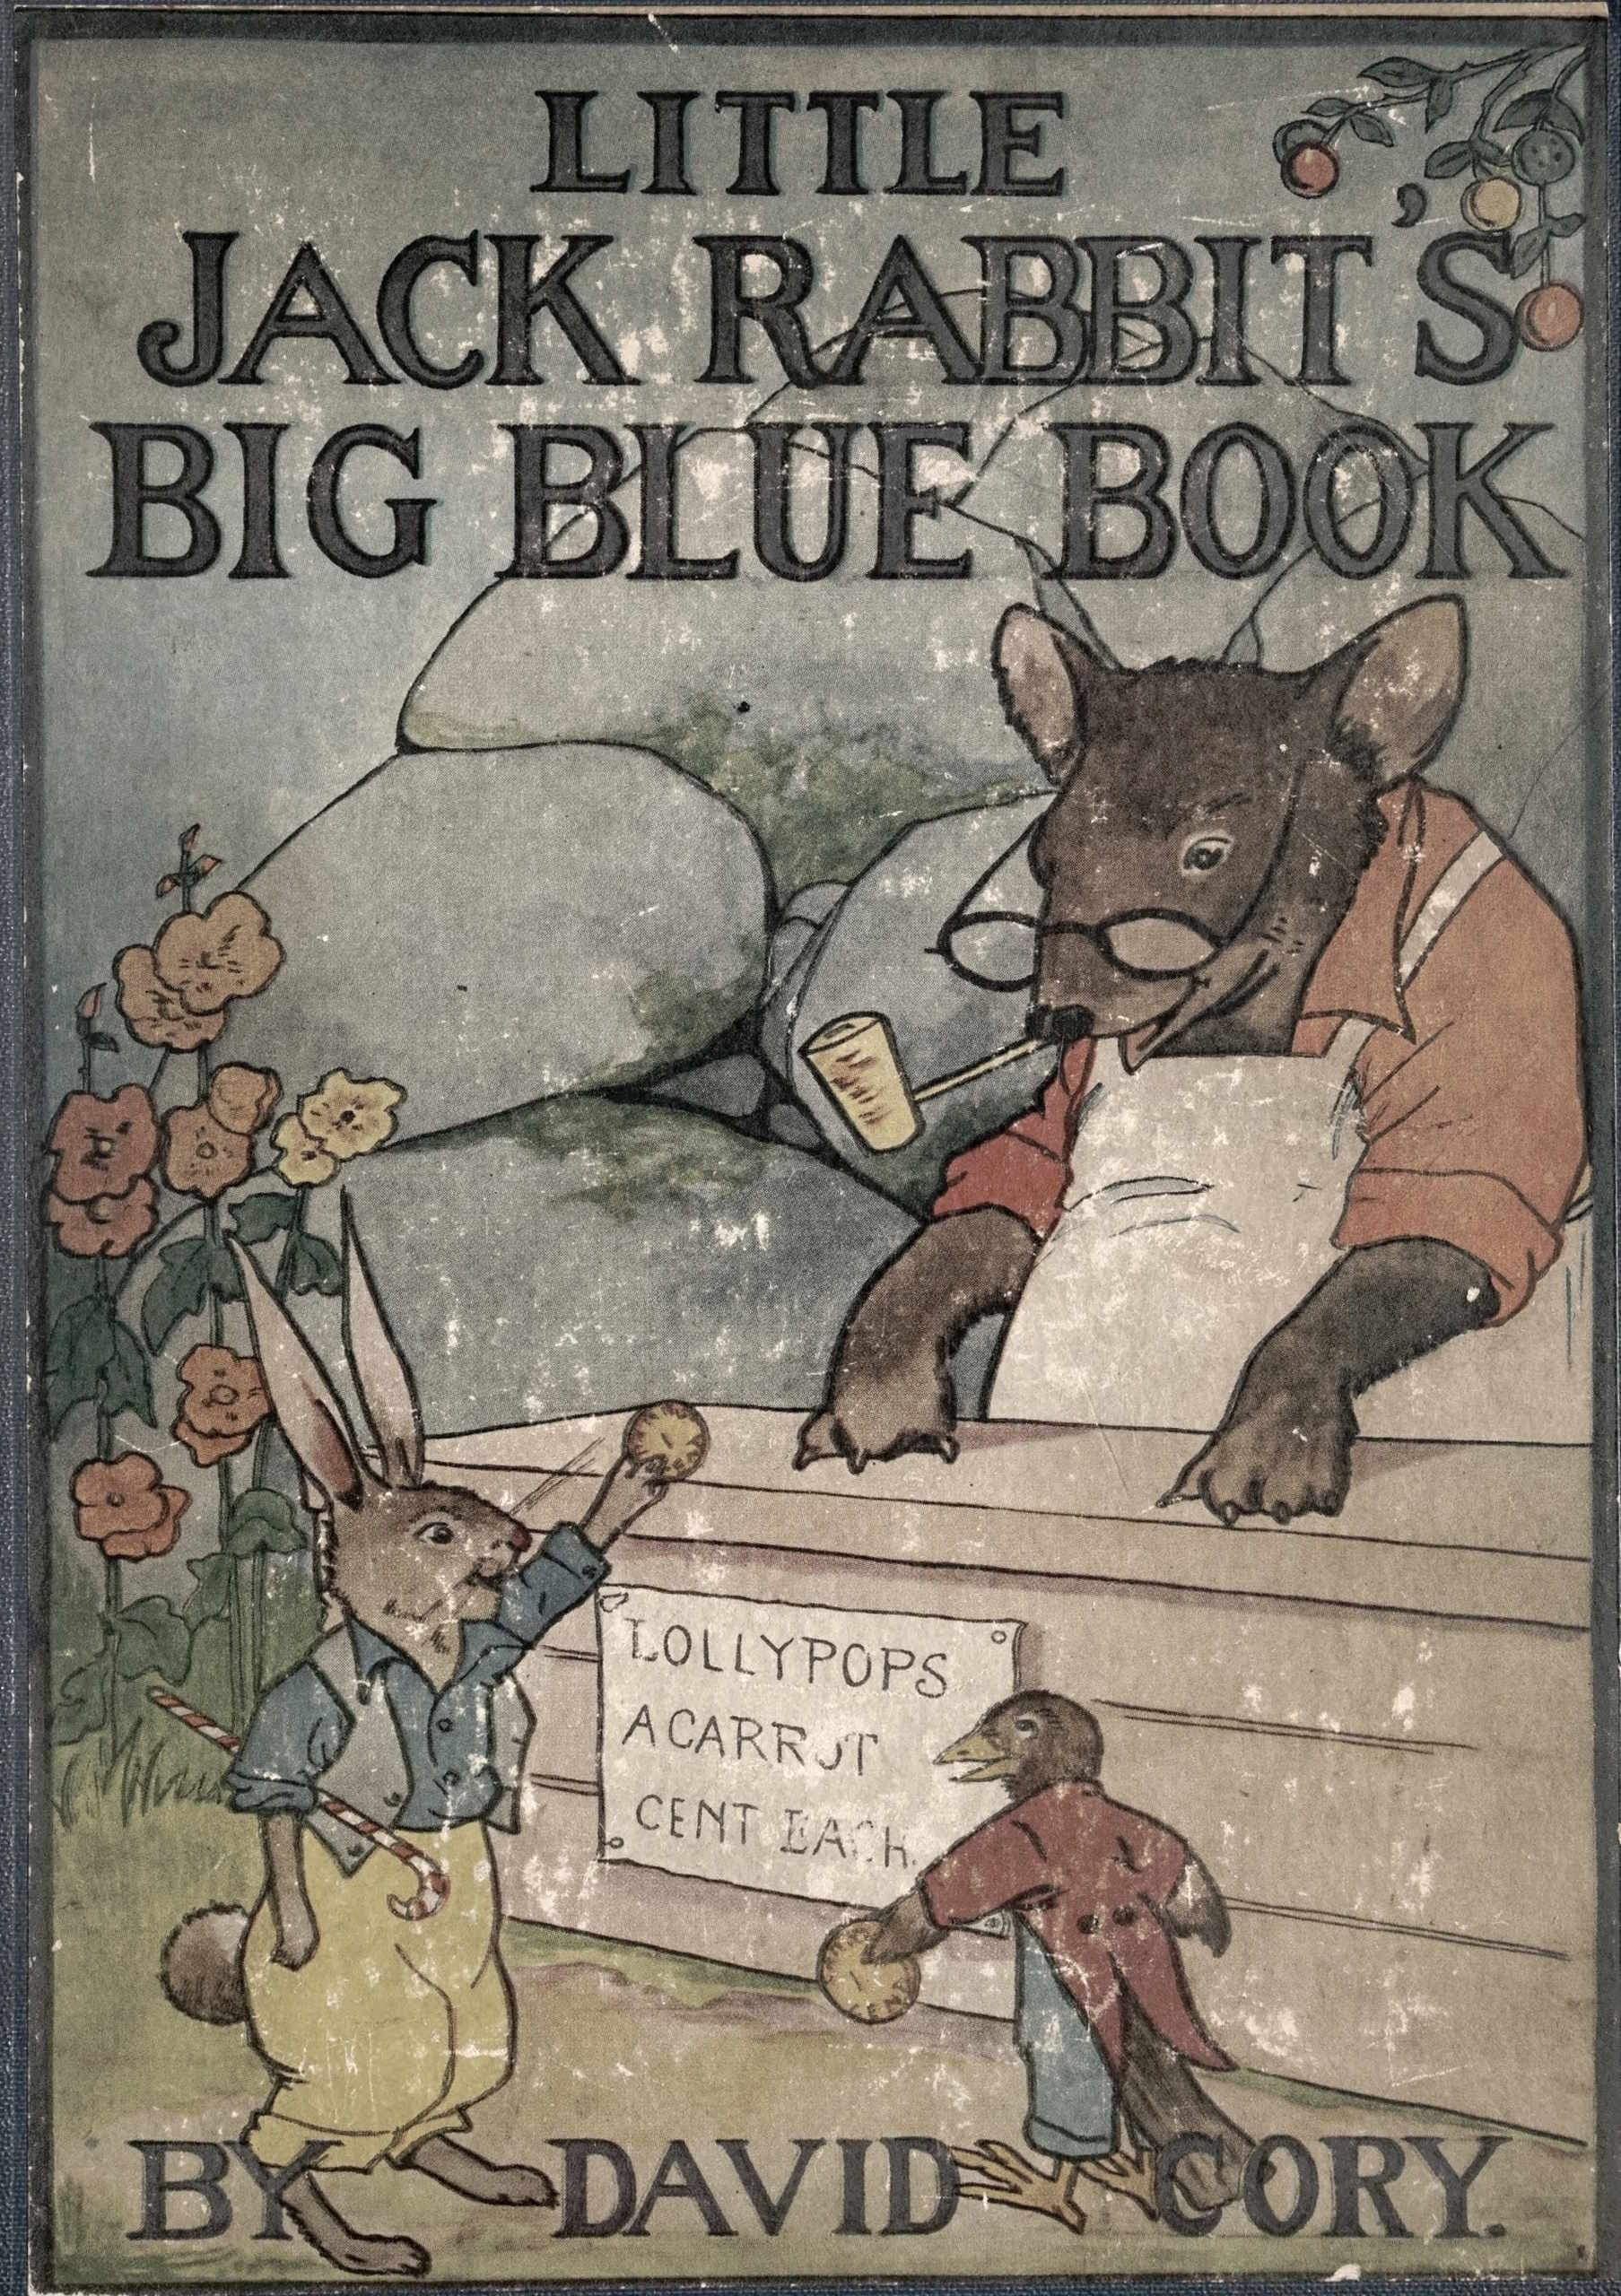 Little Jack Rabbit's Big Blue Book | Project Gutenberg